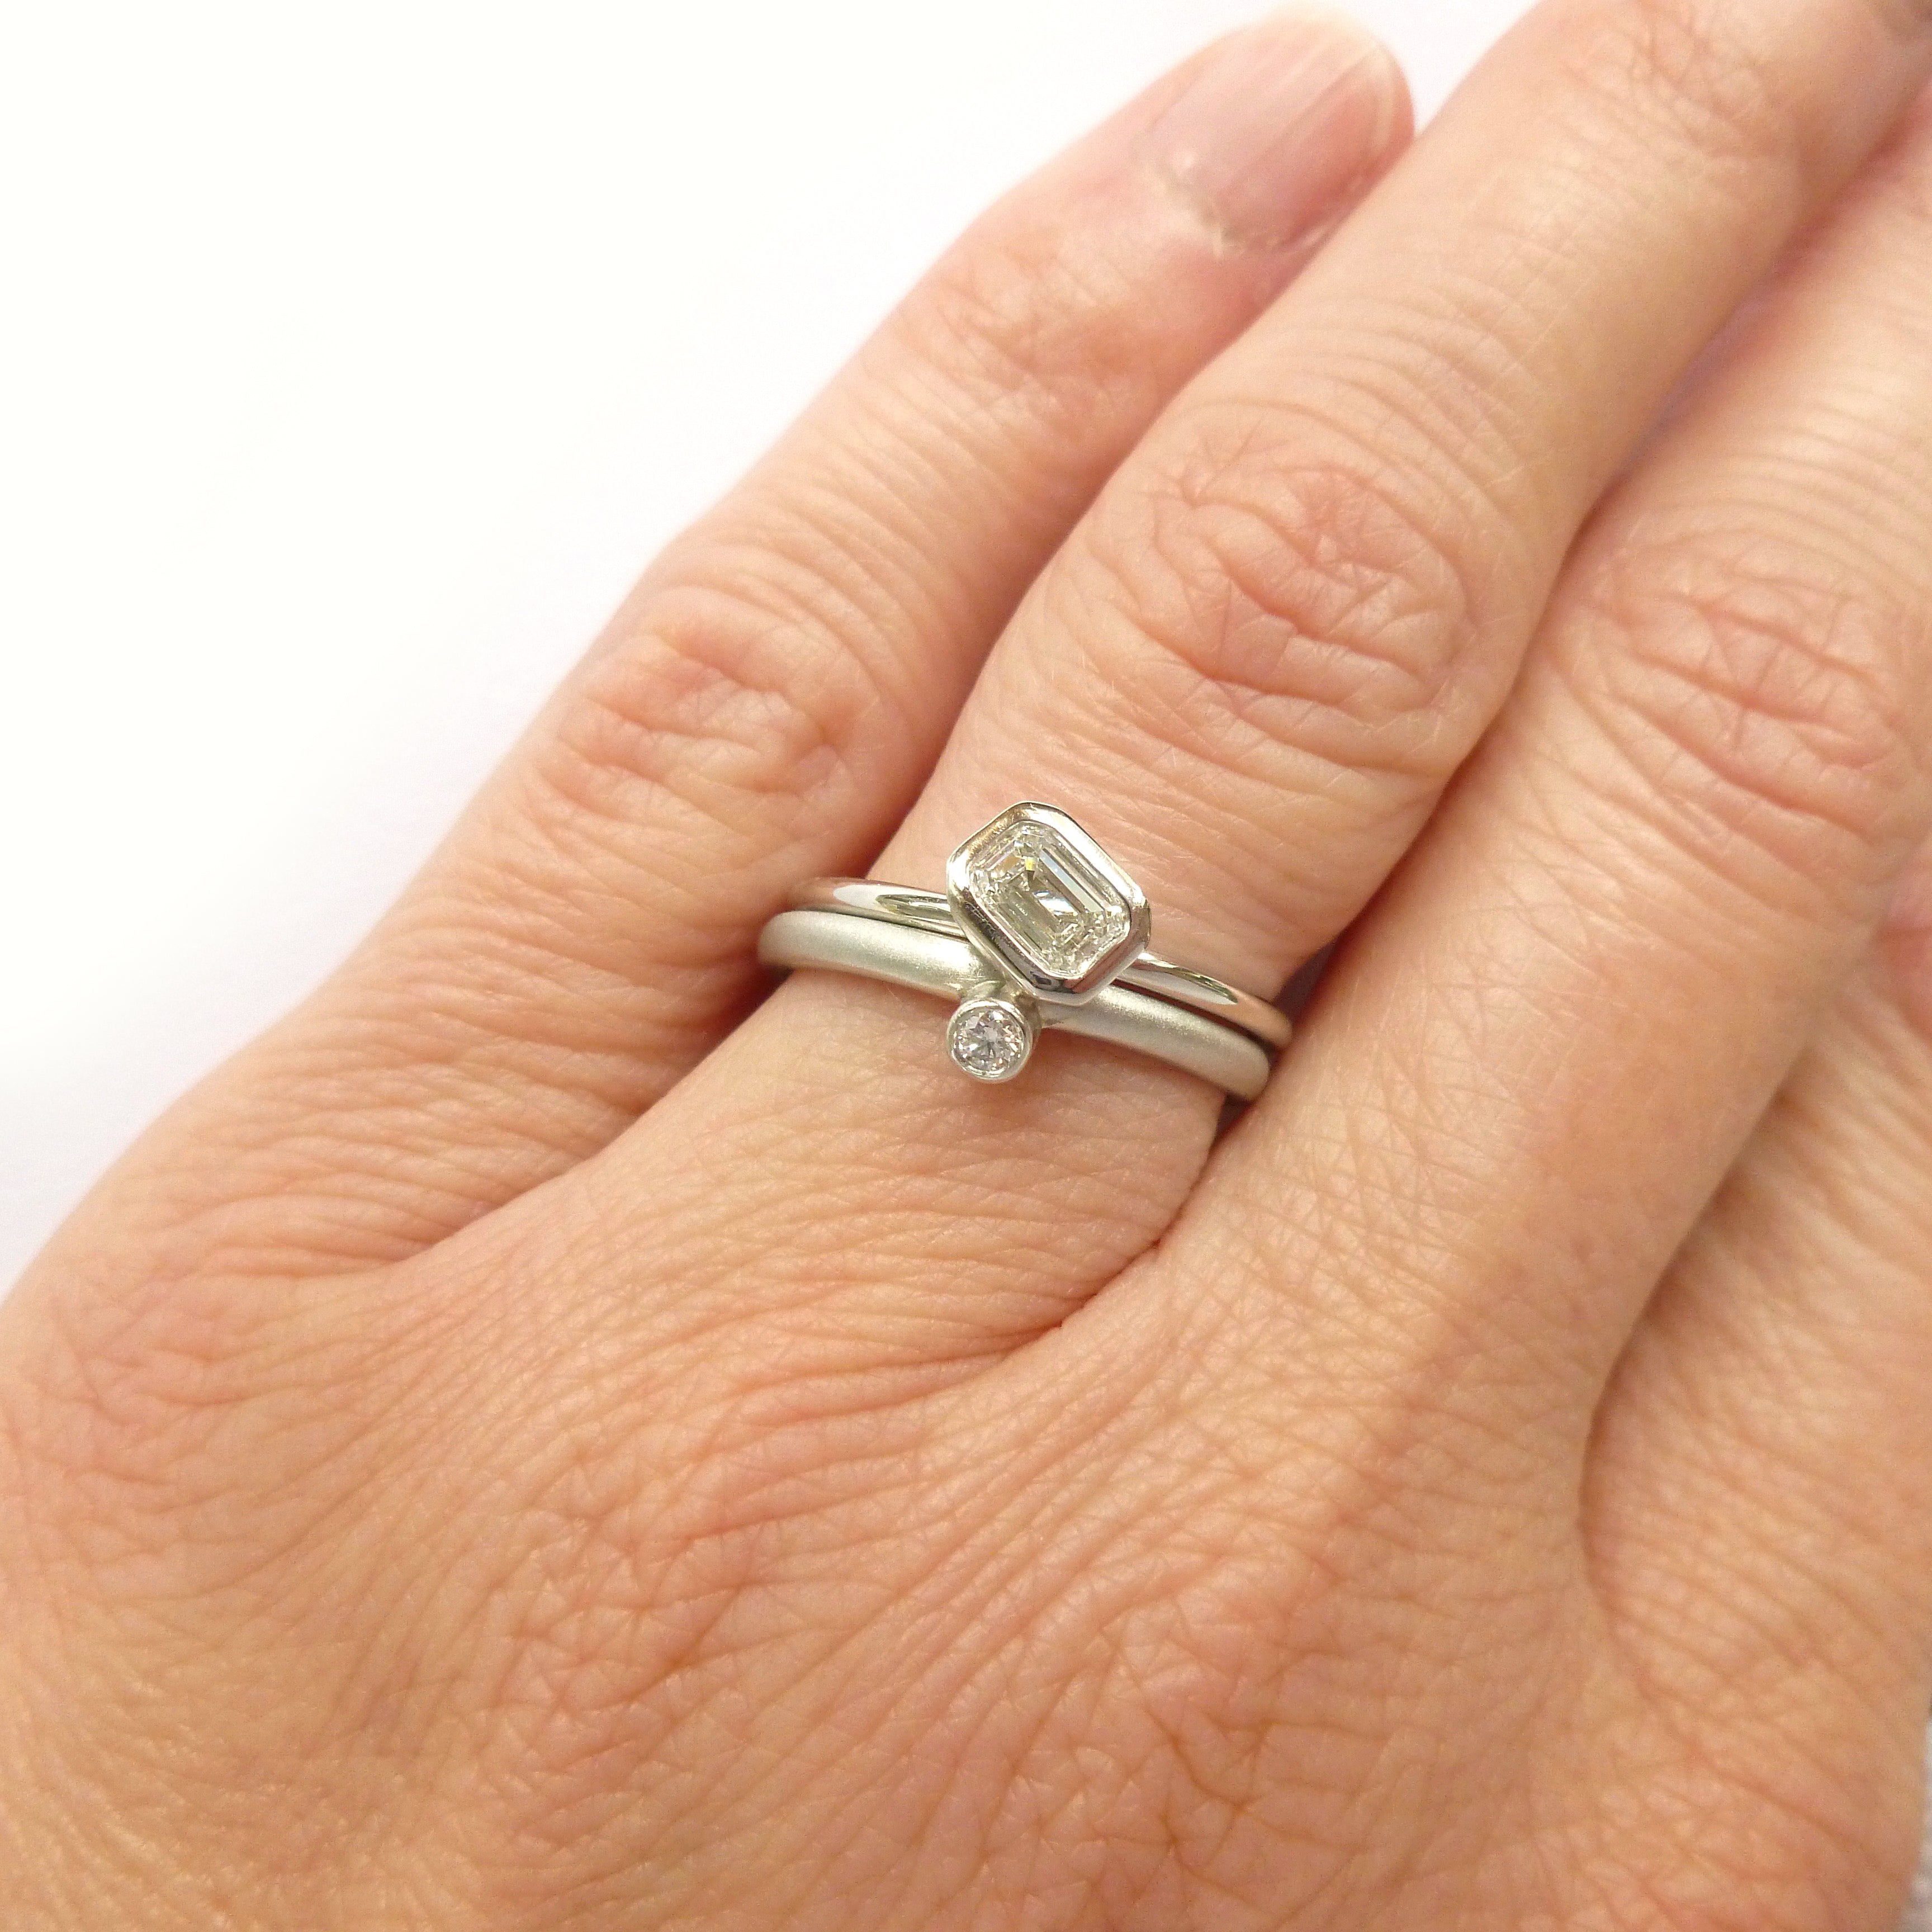 modern platinum and emerald cut diamond engagement and wedding ring handmade by Sue Lane